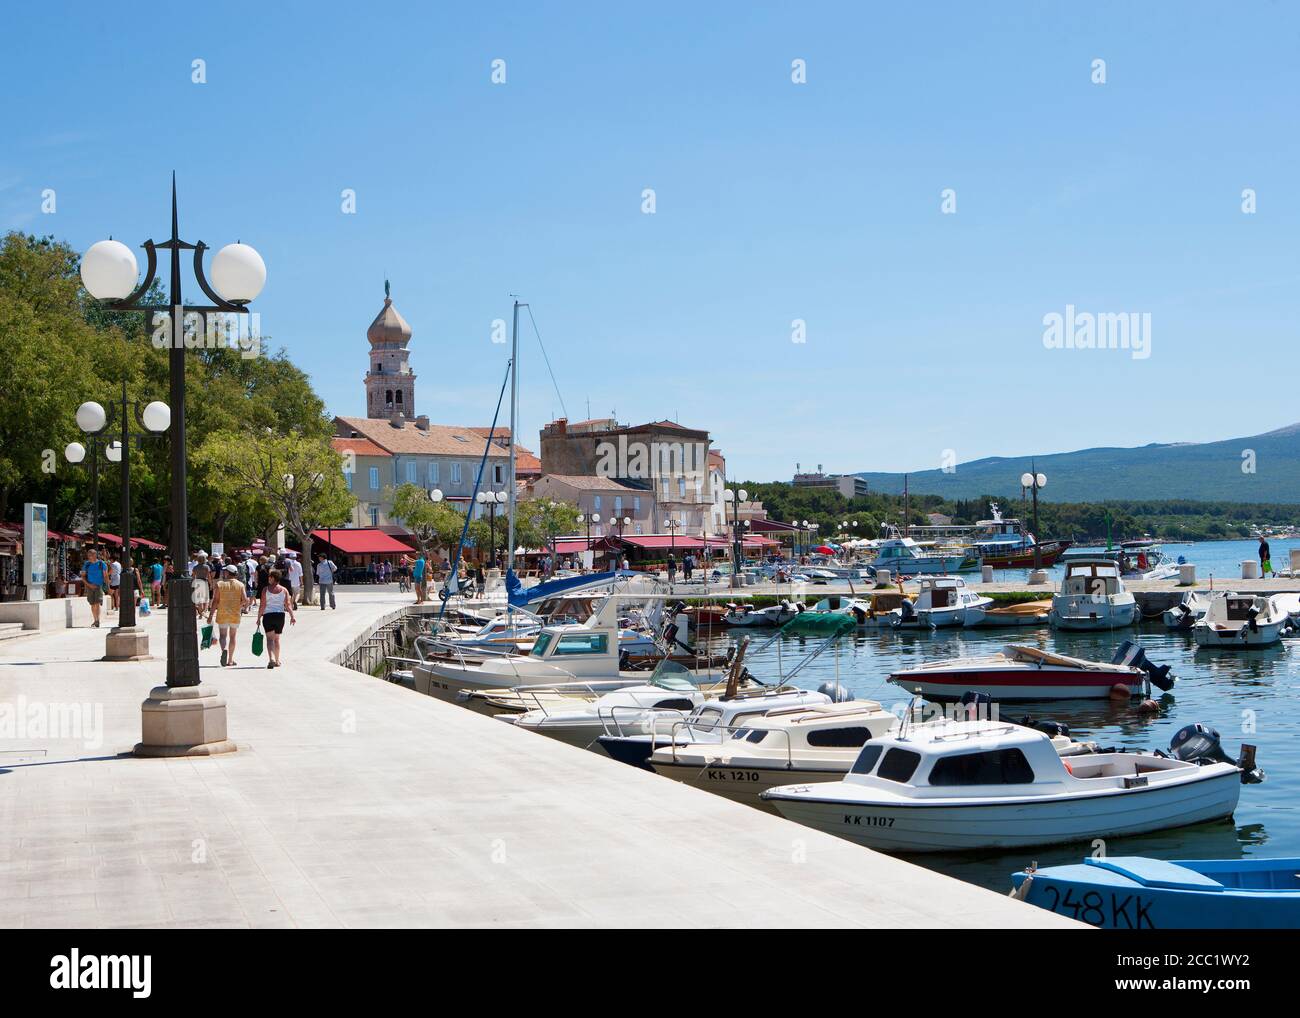 Croazia, Krk, vista del mare Adriatico a isola di Krk Foto Stock